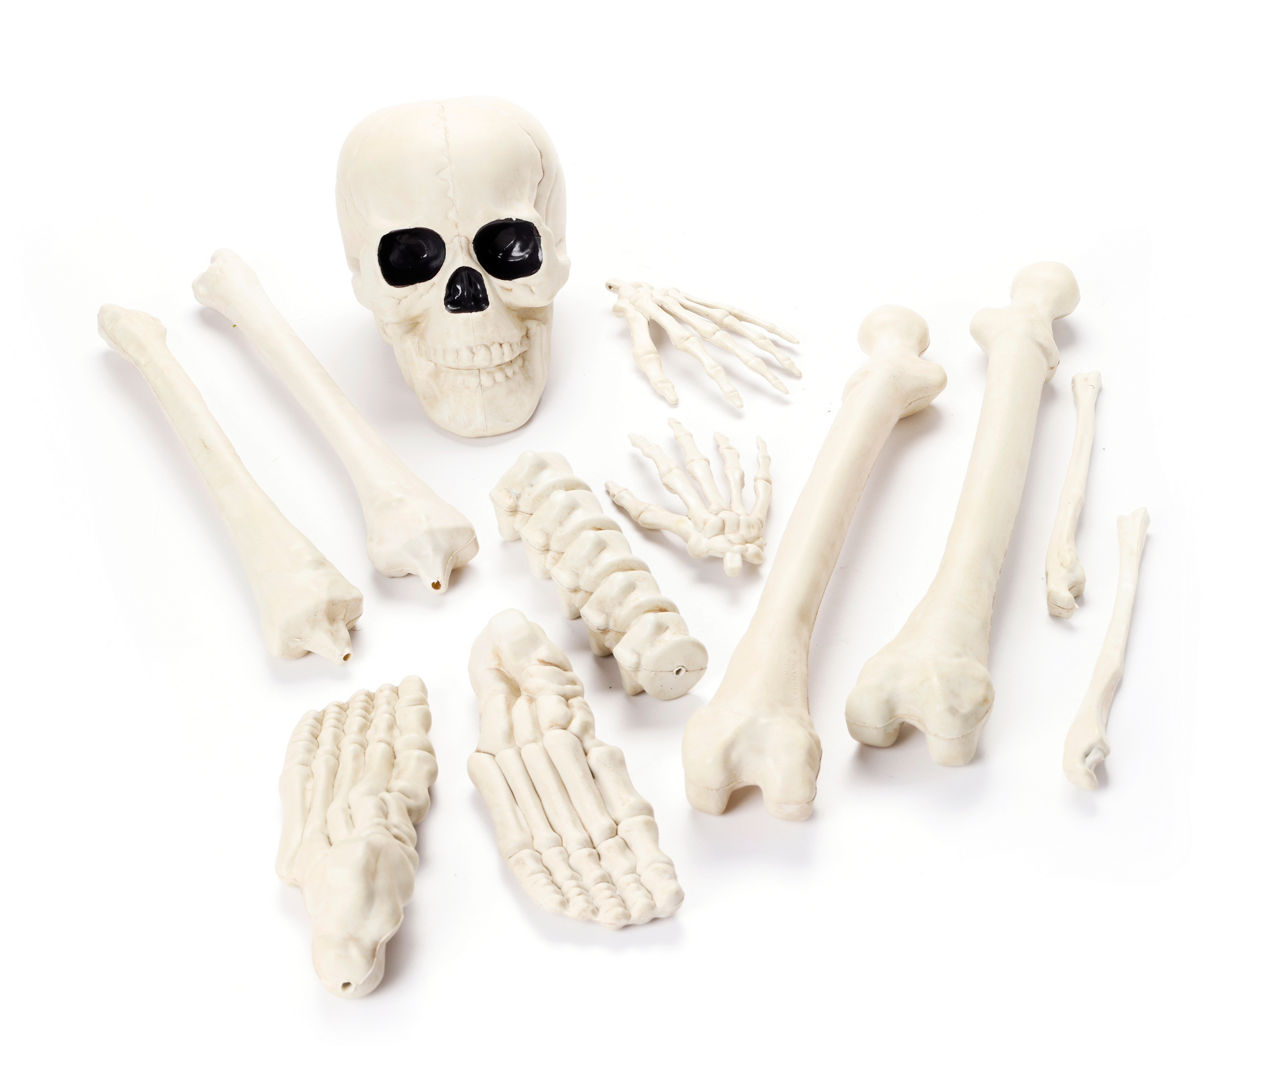 bag-of-skeleton-bones-12-piece-decor-set-big-lots